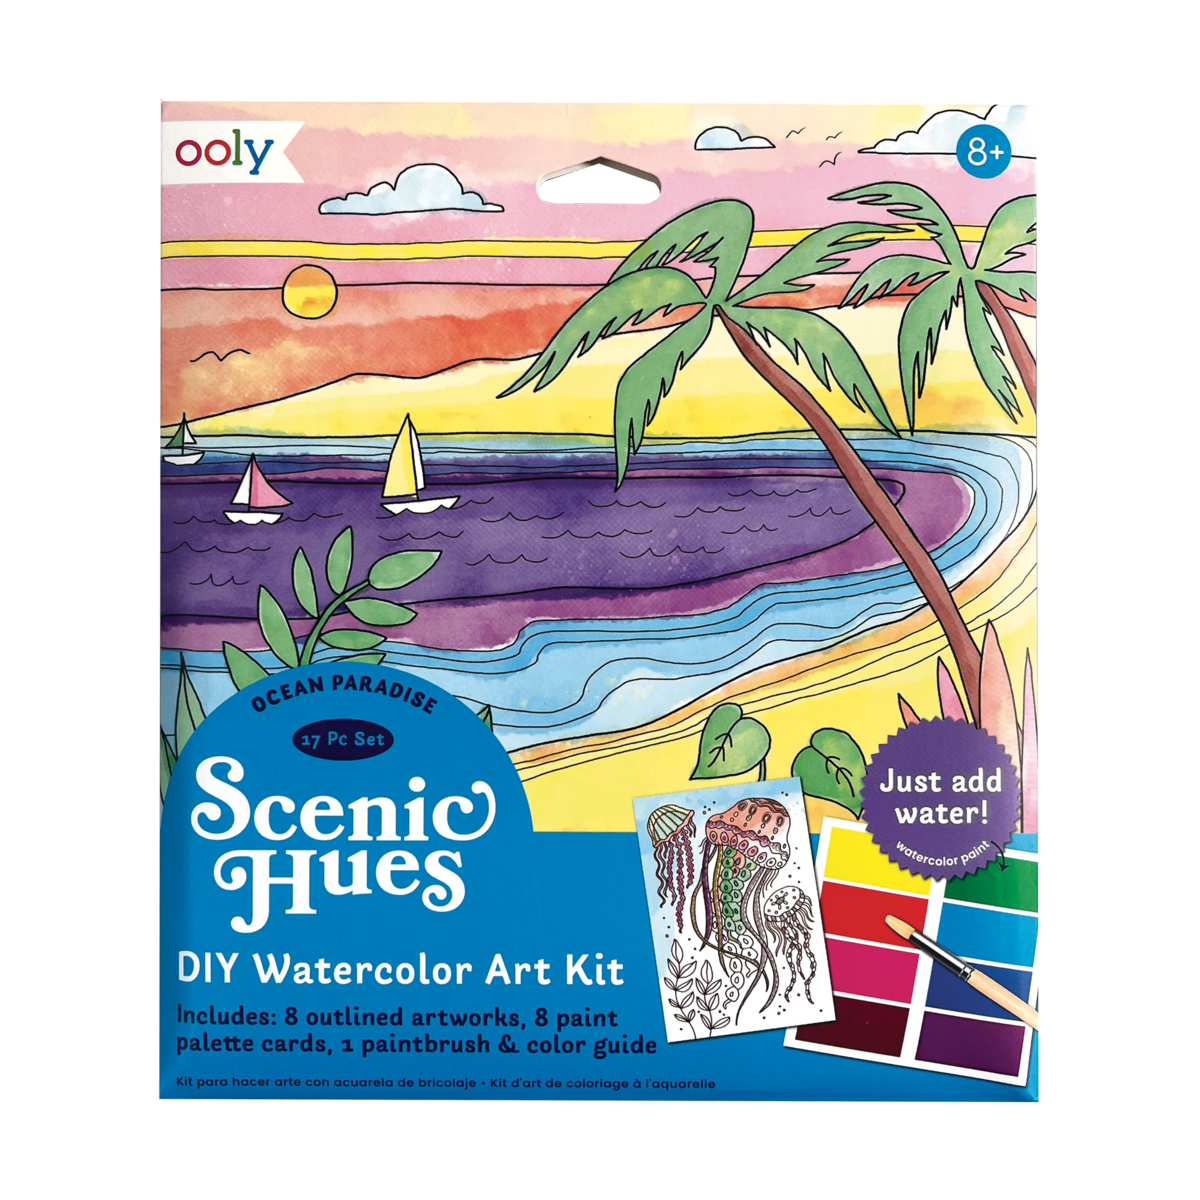 Ocean Paradise Scenic Hues DIY watercolor art kit packaging